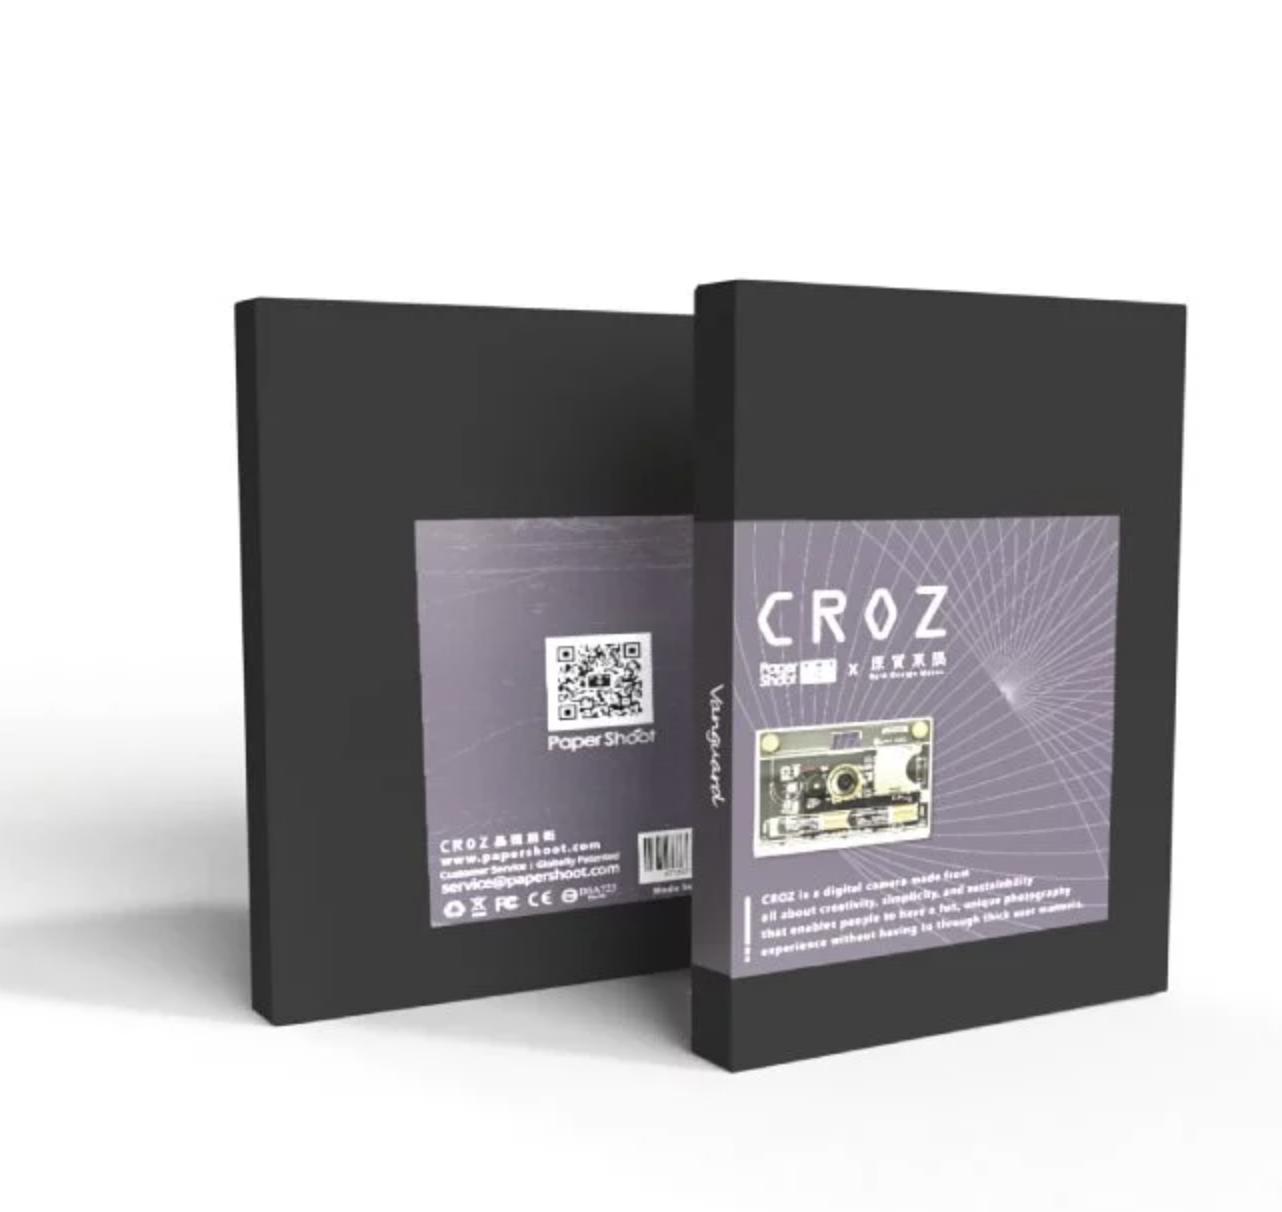 CROZ - Vanguard (Case Only)